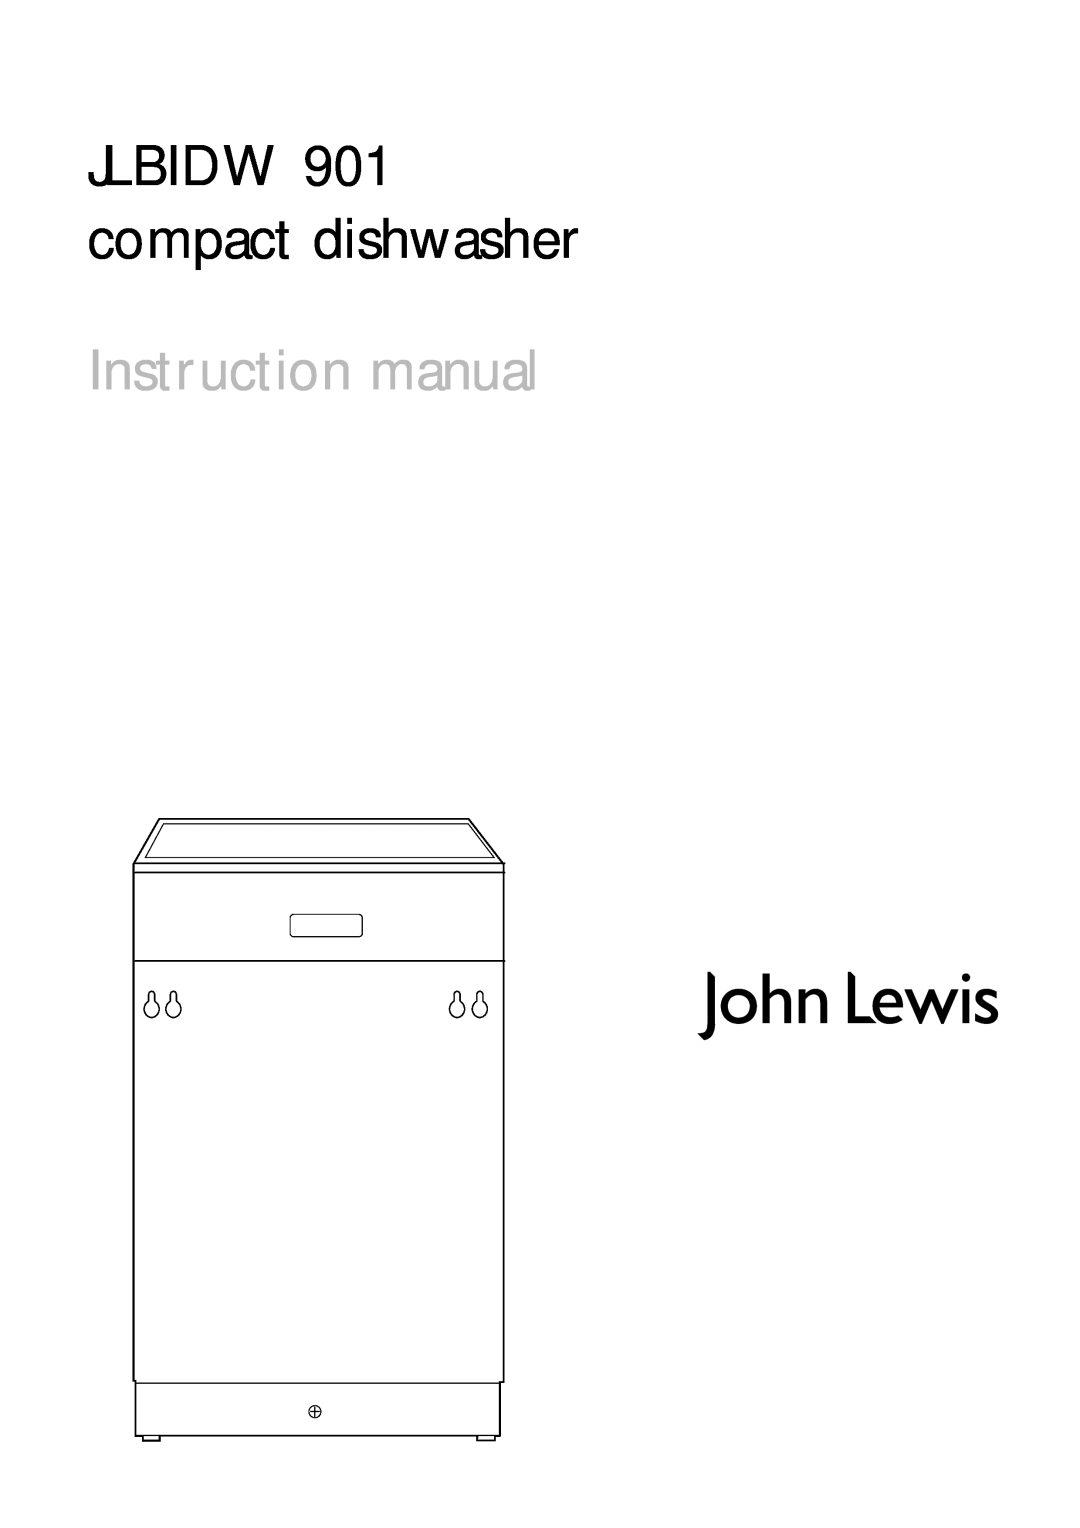 John Lewis instruction manual JLBIDW 901 compact dishwasher 